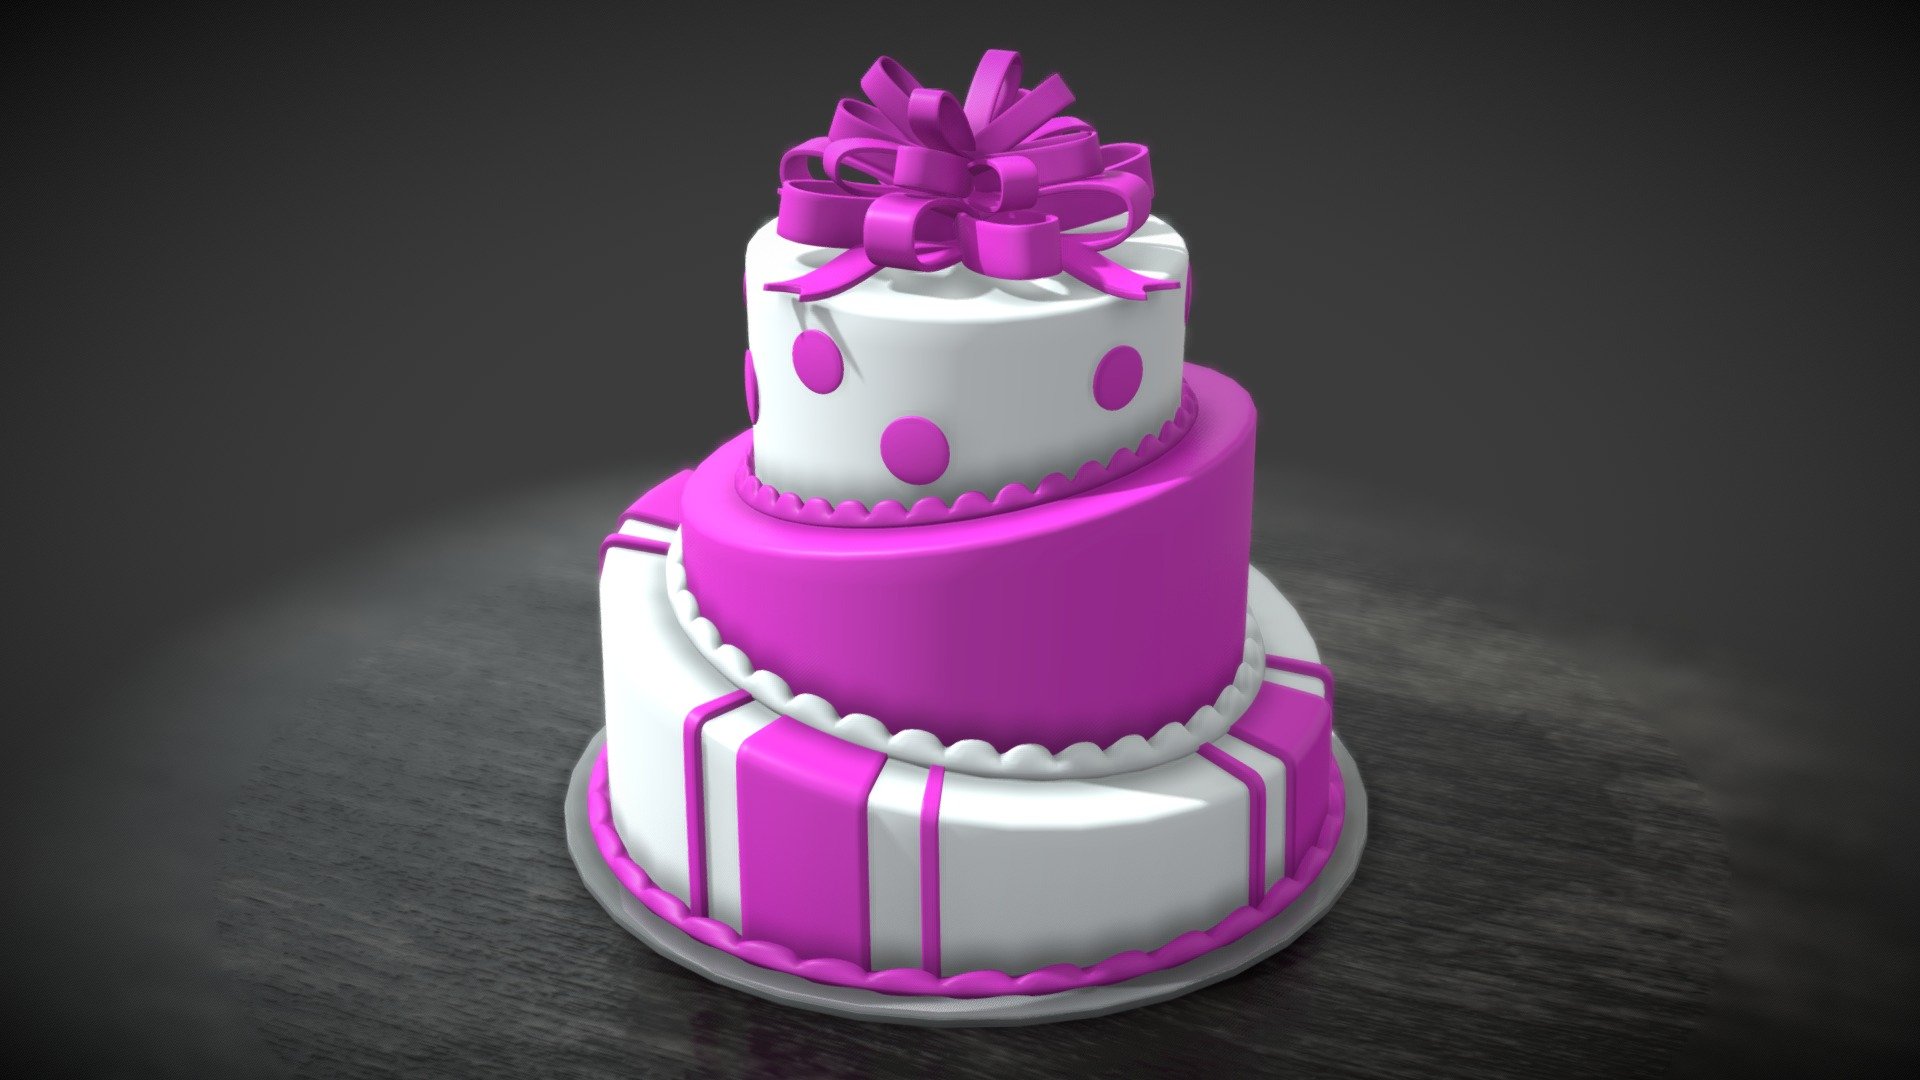 Dribbble - Birthday cake.png by Max ⚡️ Osichka